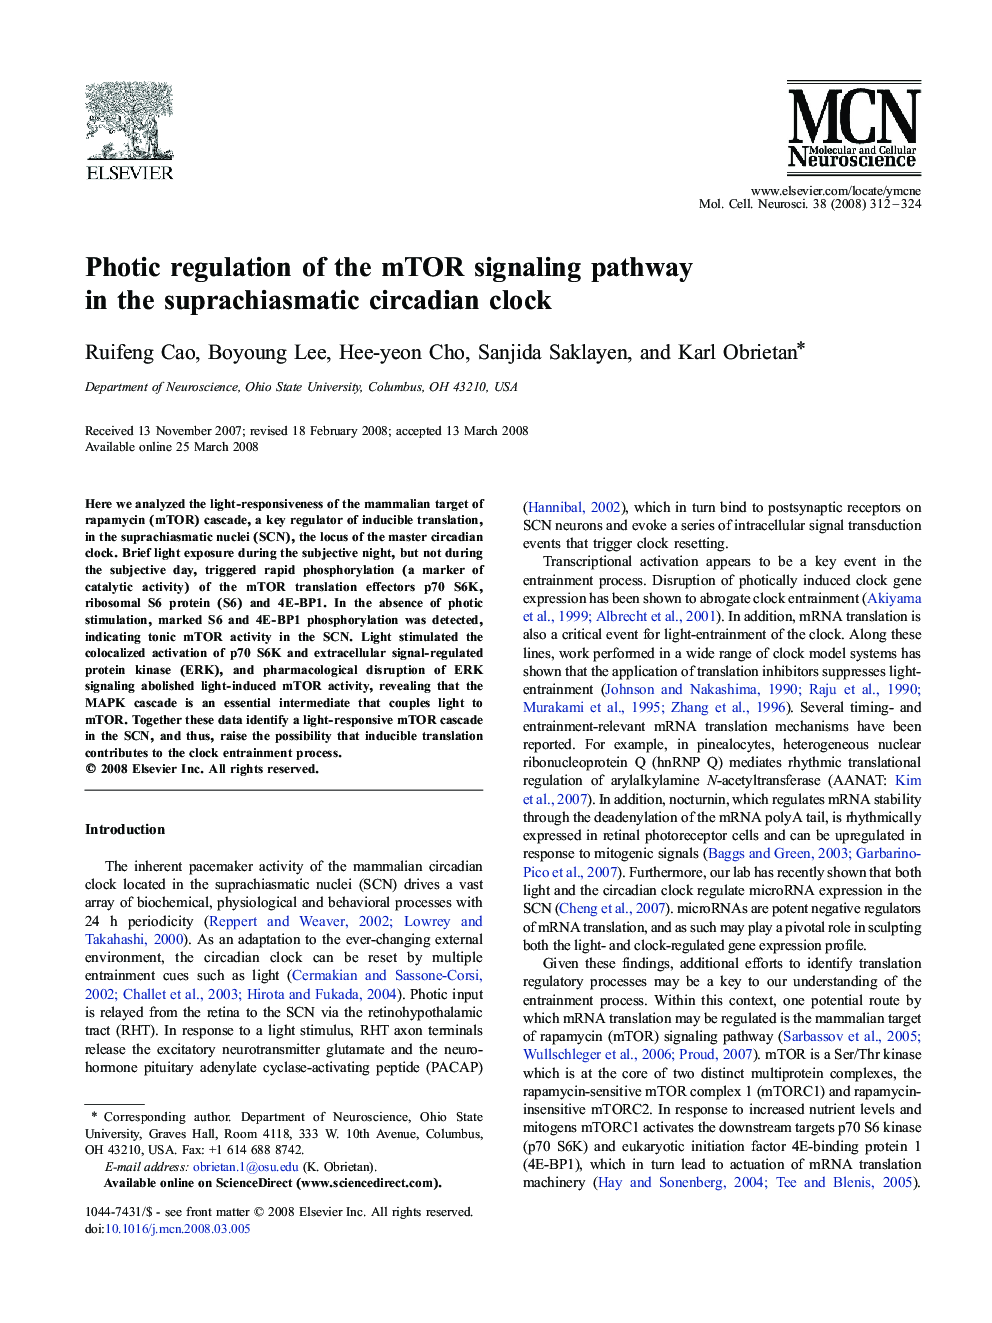 Photic regulation of the mTOR signaling pathway in the suprachiasmatic circadian clock